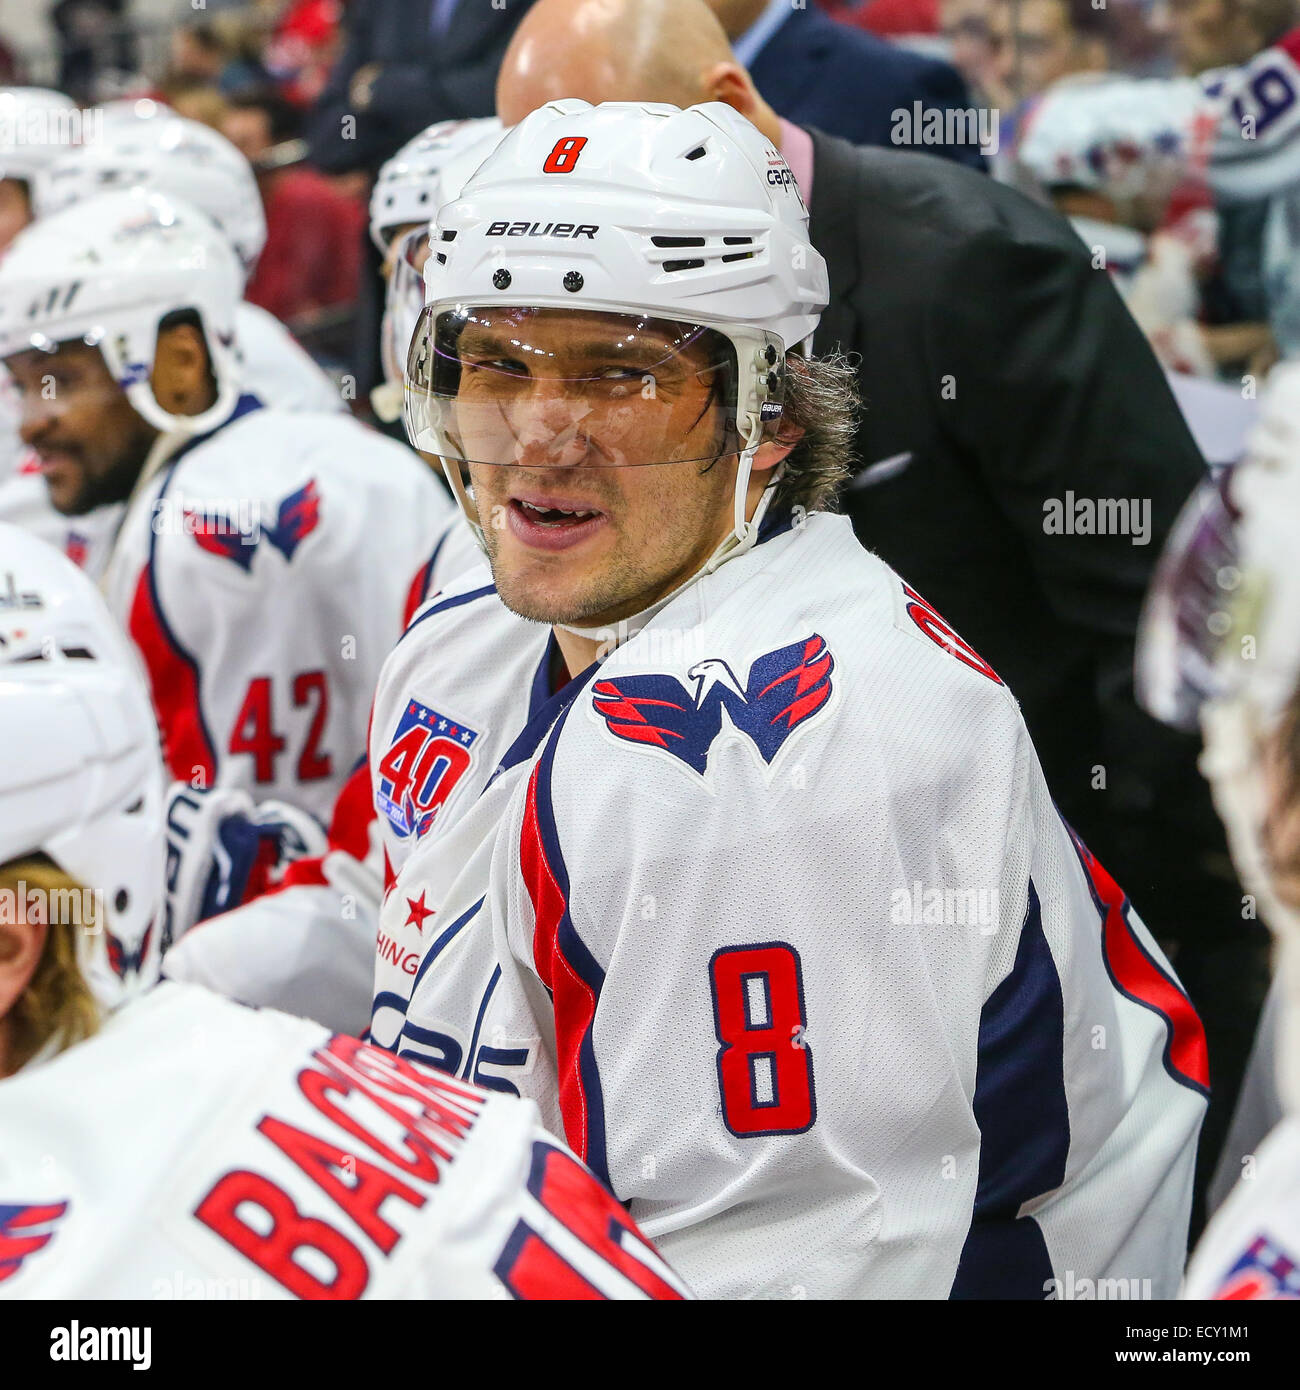 NHL Wallpapers – Alexander Ovechkin Washington Capitals 2014 wallpaper